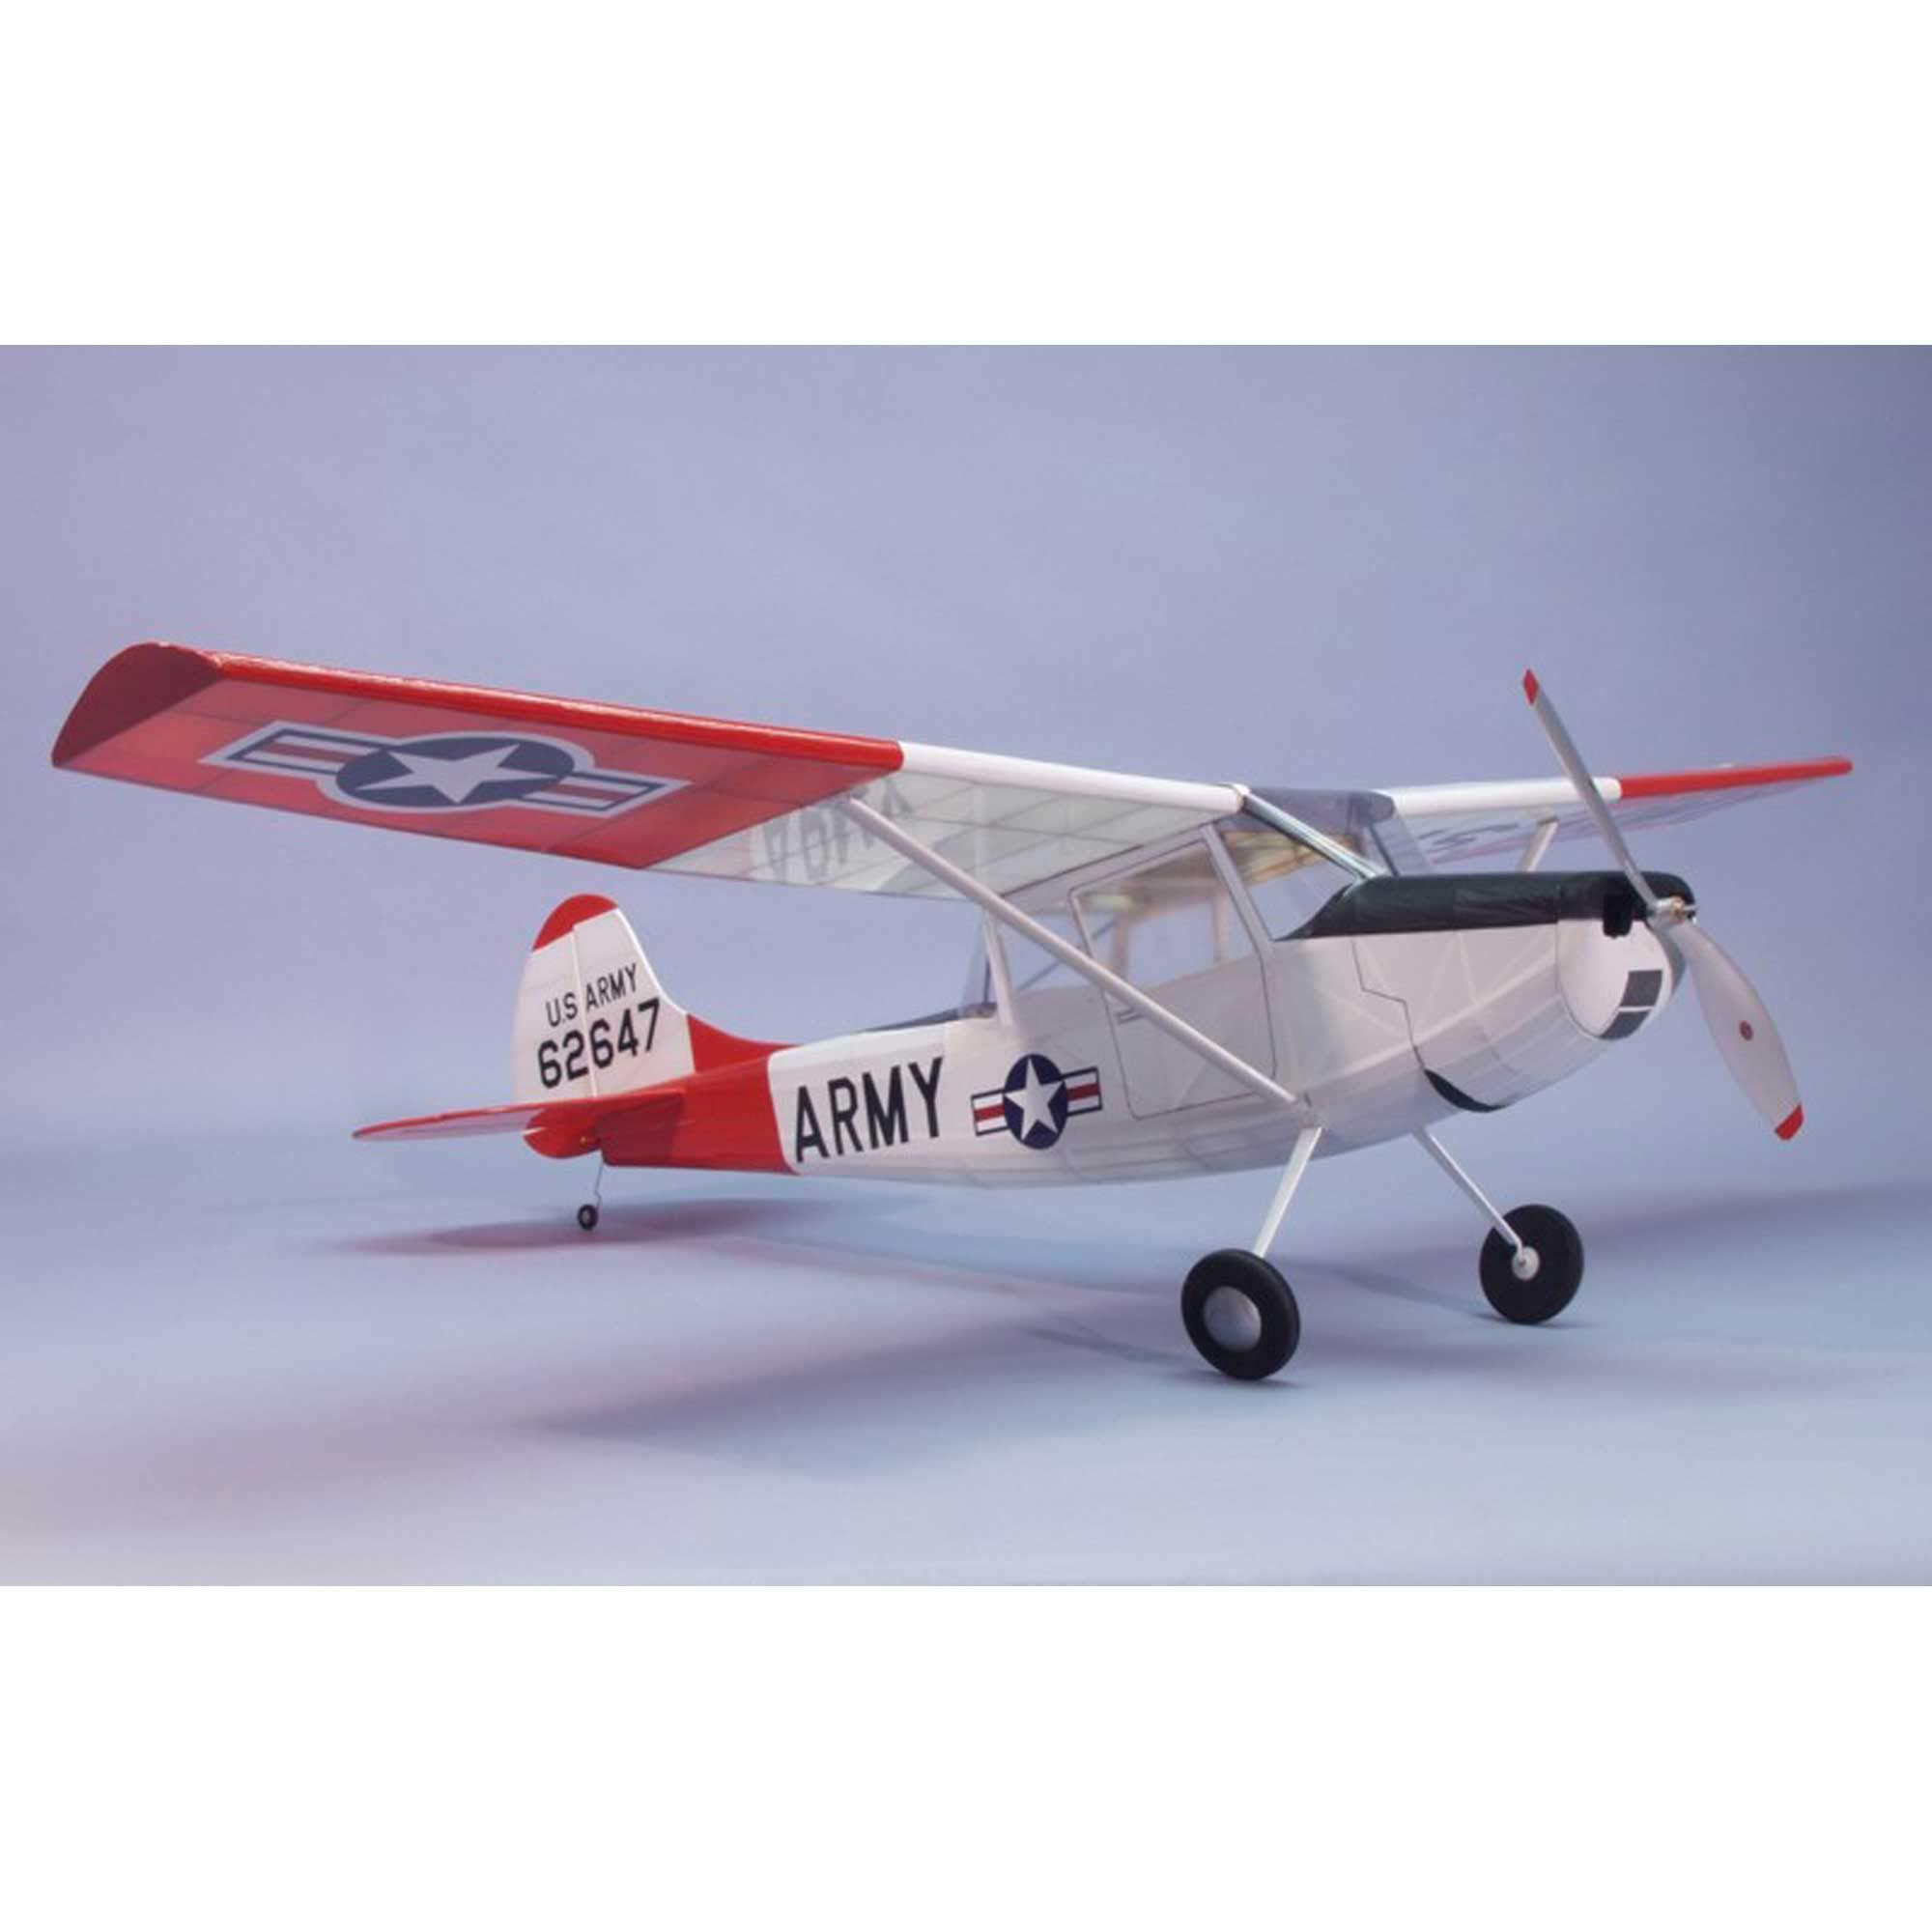 Dumas Airplane Kits: Dumas Airplane Kits: From Basement Beginnings to Aviation Enthusiasts' Favorites